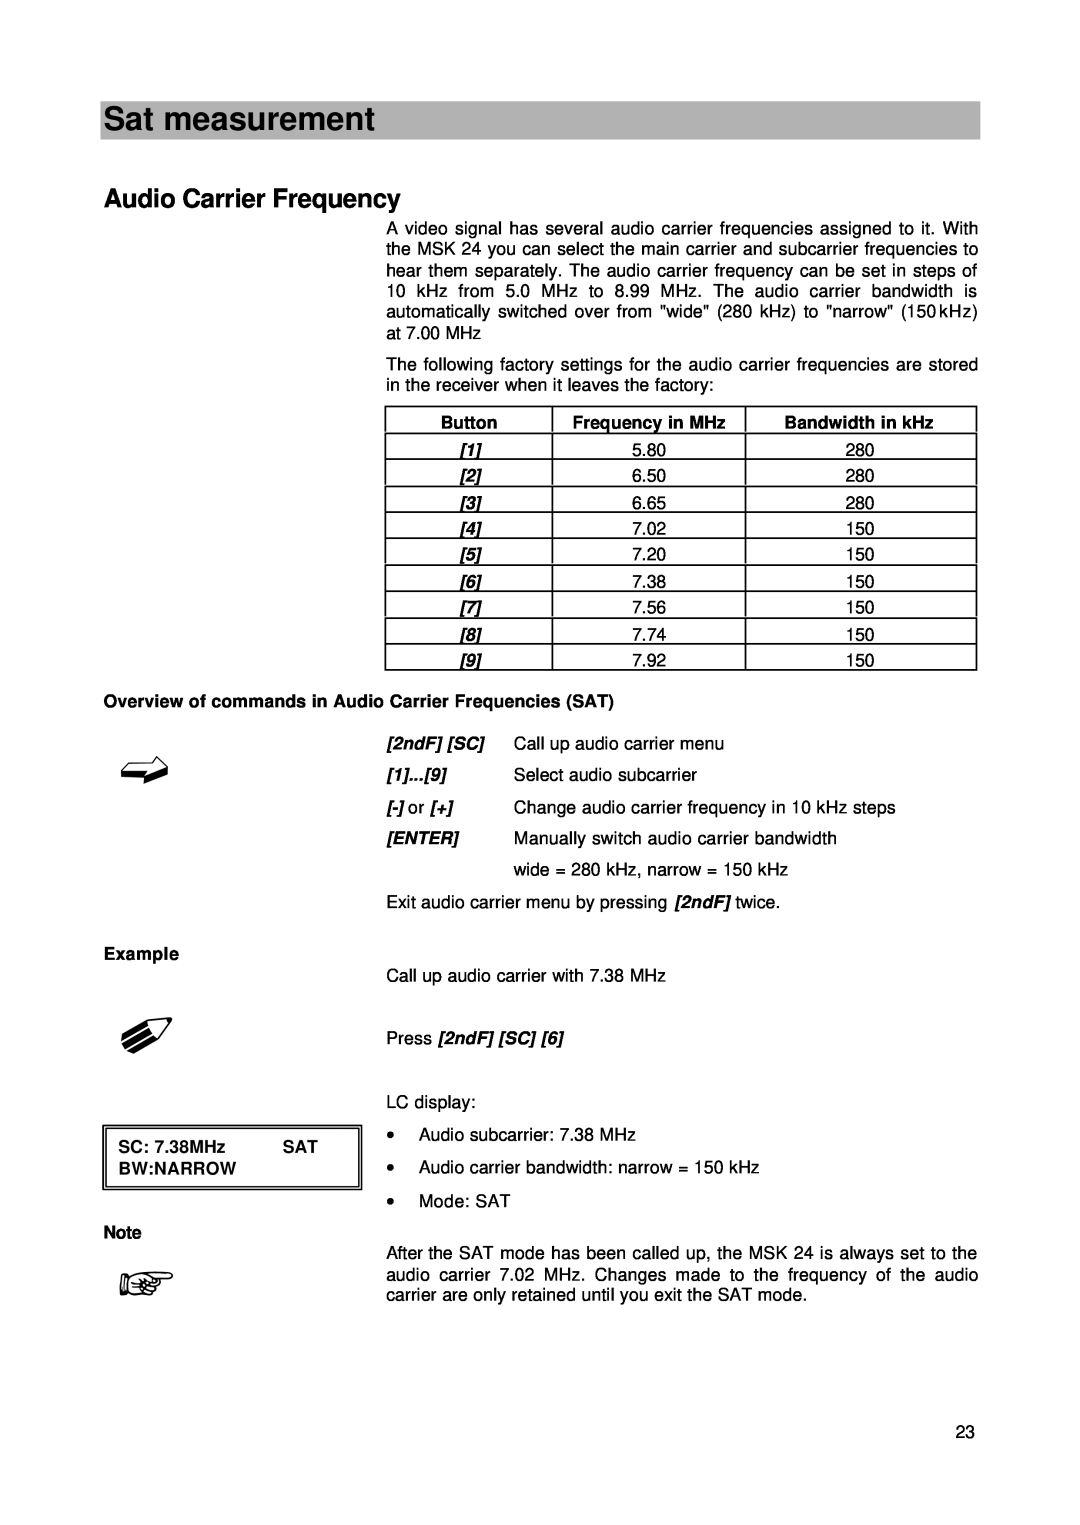 Kathrein MSK 24 manual Audio Carrier Frequency, Press 2ndF SC, Sat measurement 